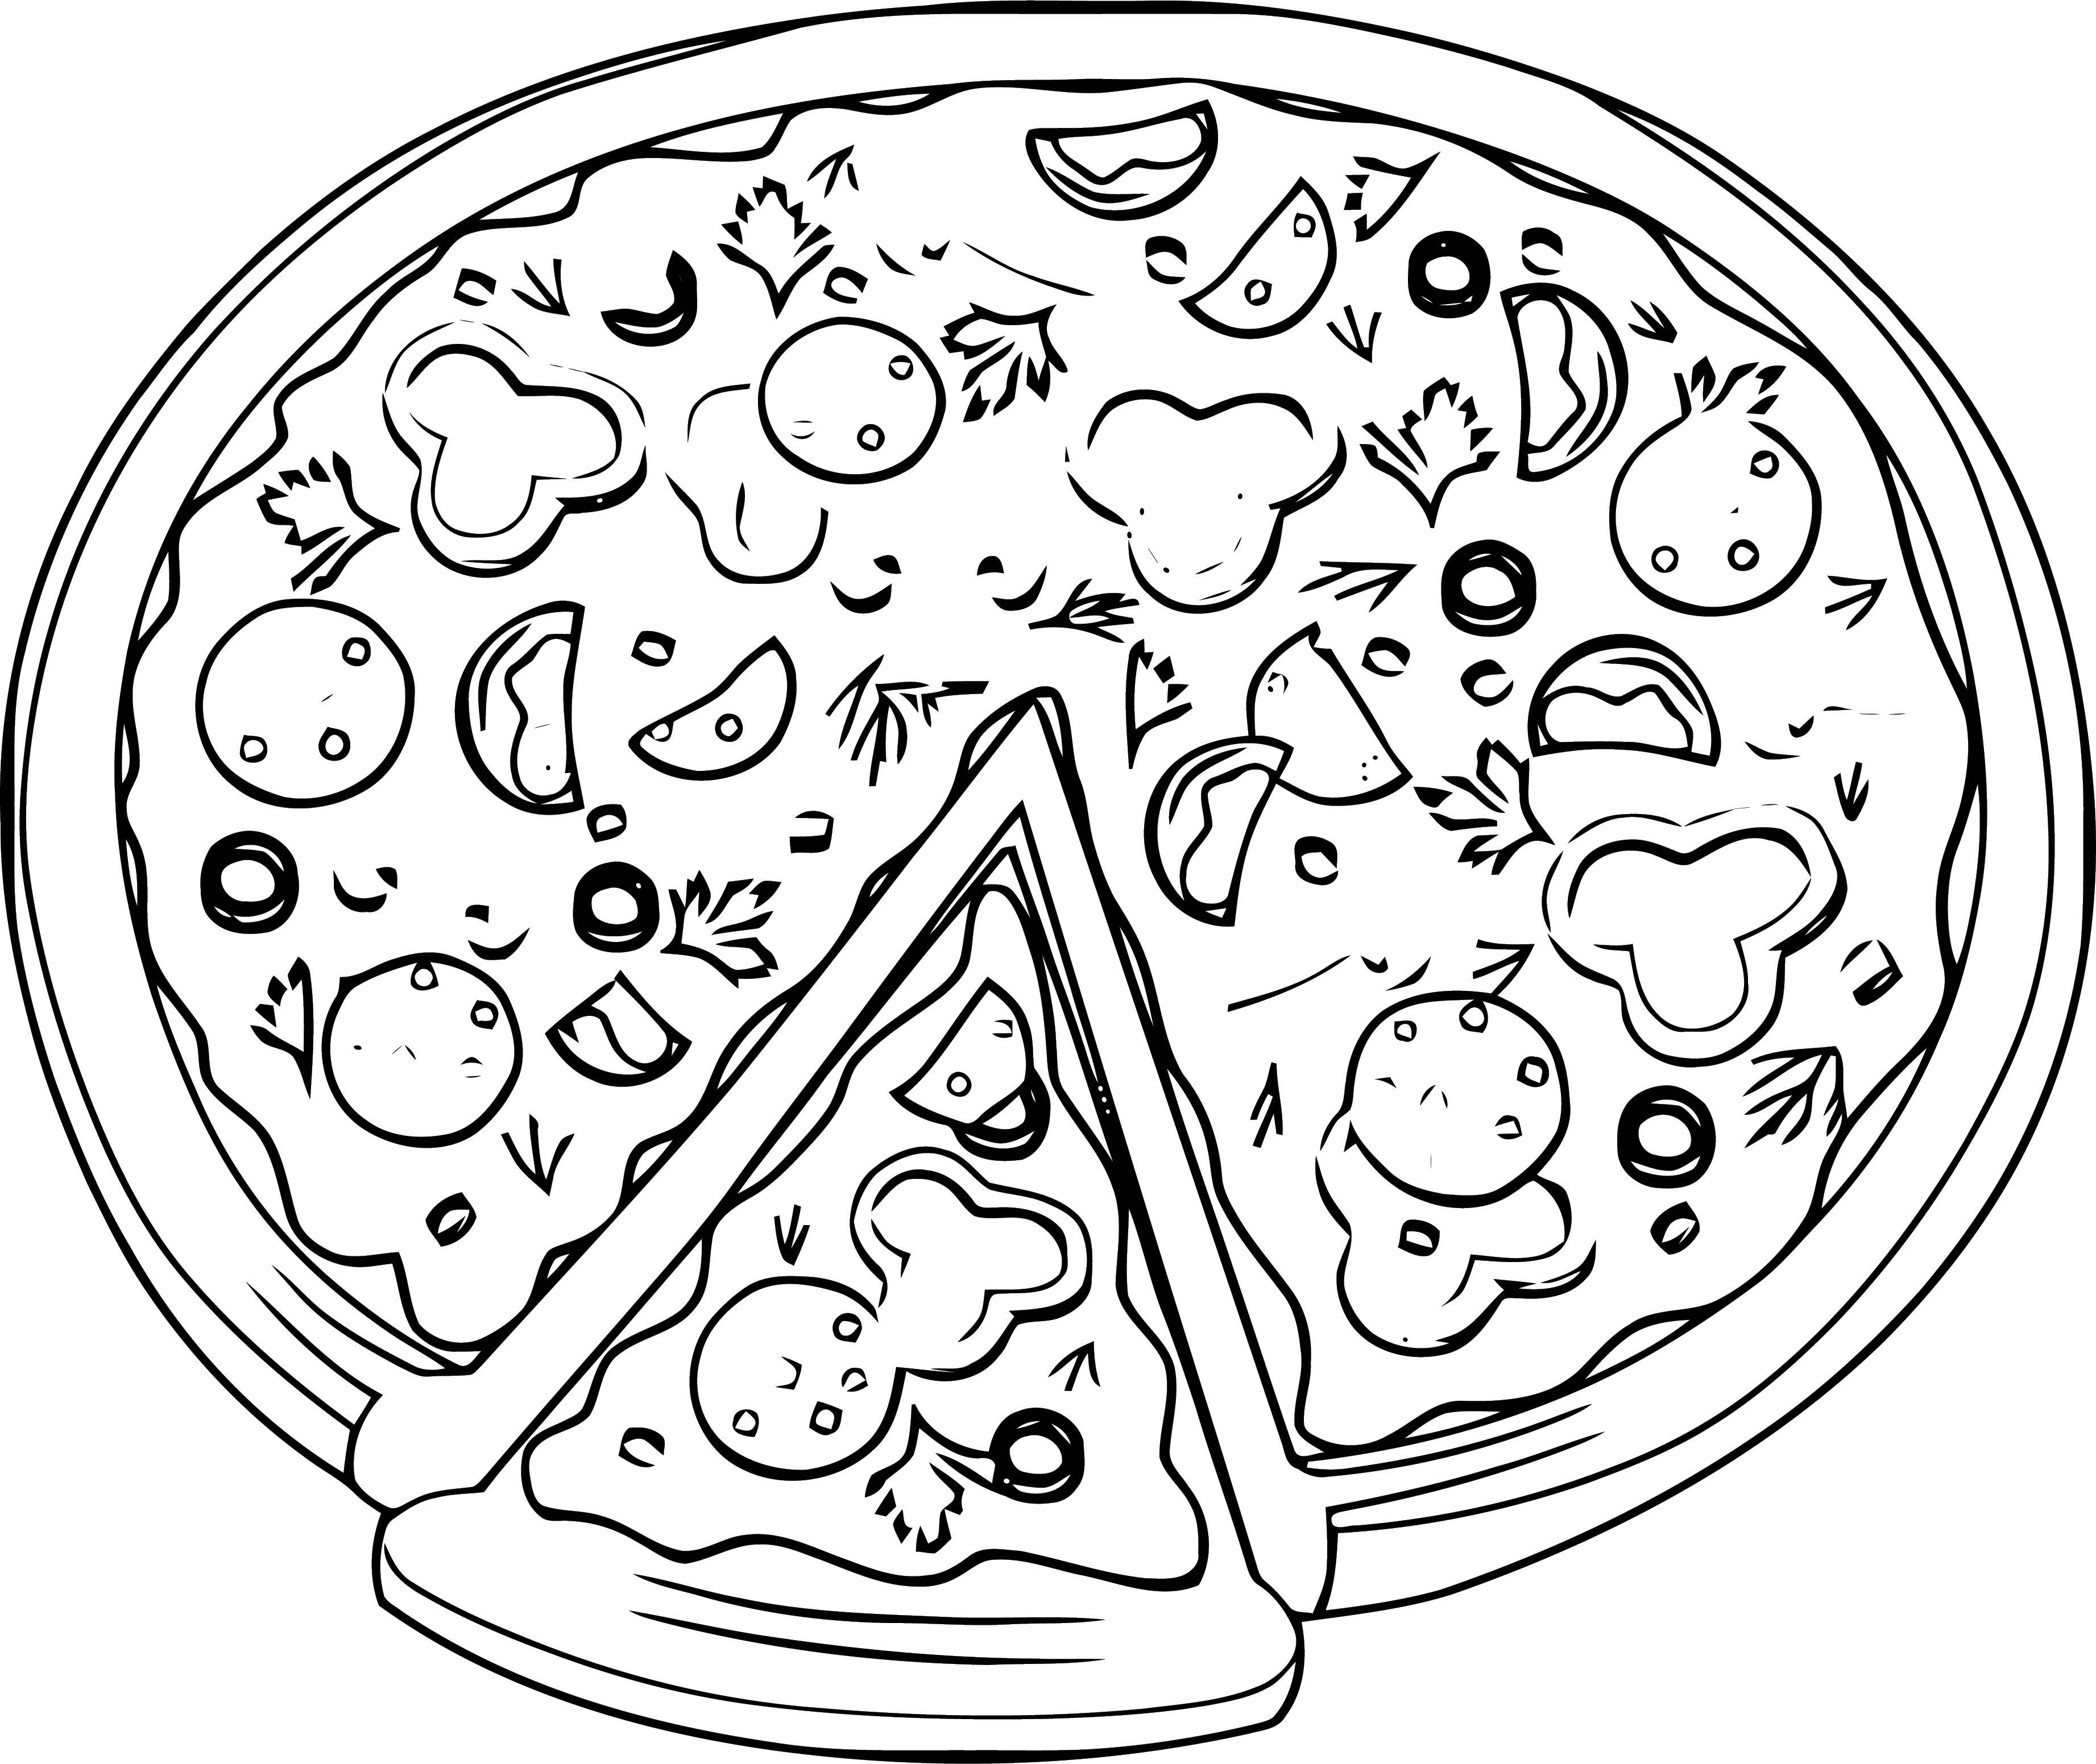 Еда раскрасить. Раскраска пицца. Пицца раскраска для детей. Пицца трафарет. Пицца для распечатки.